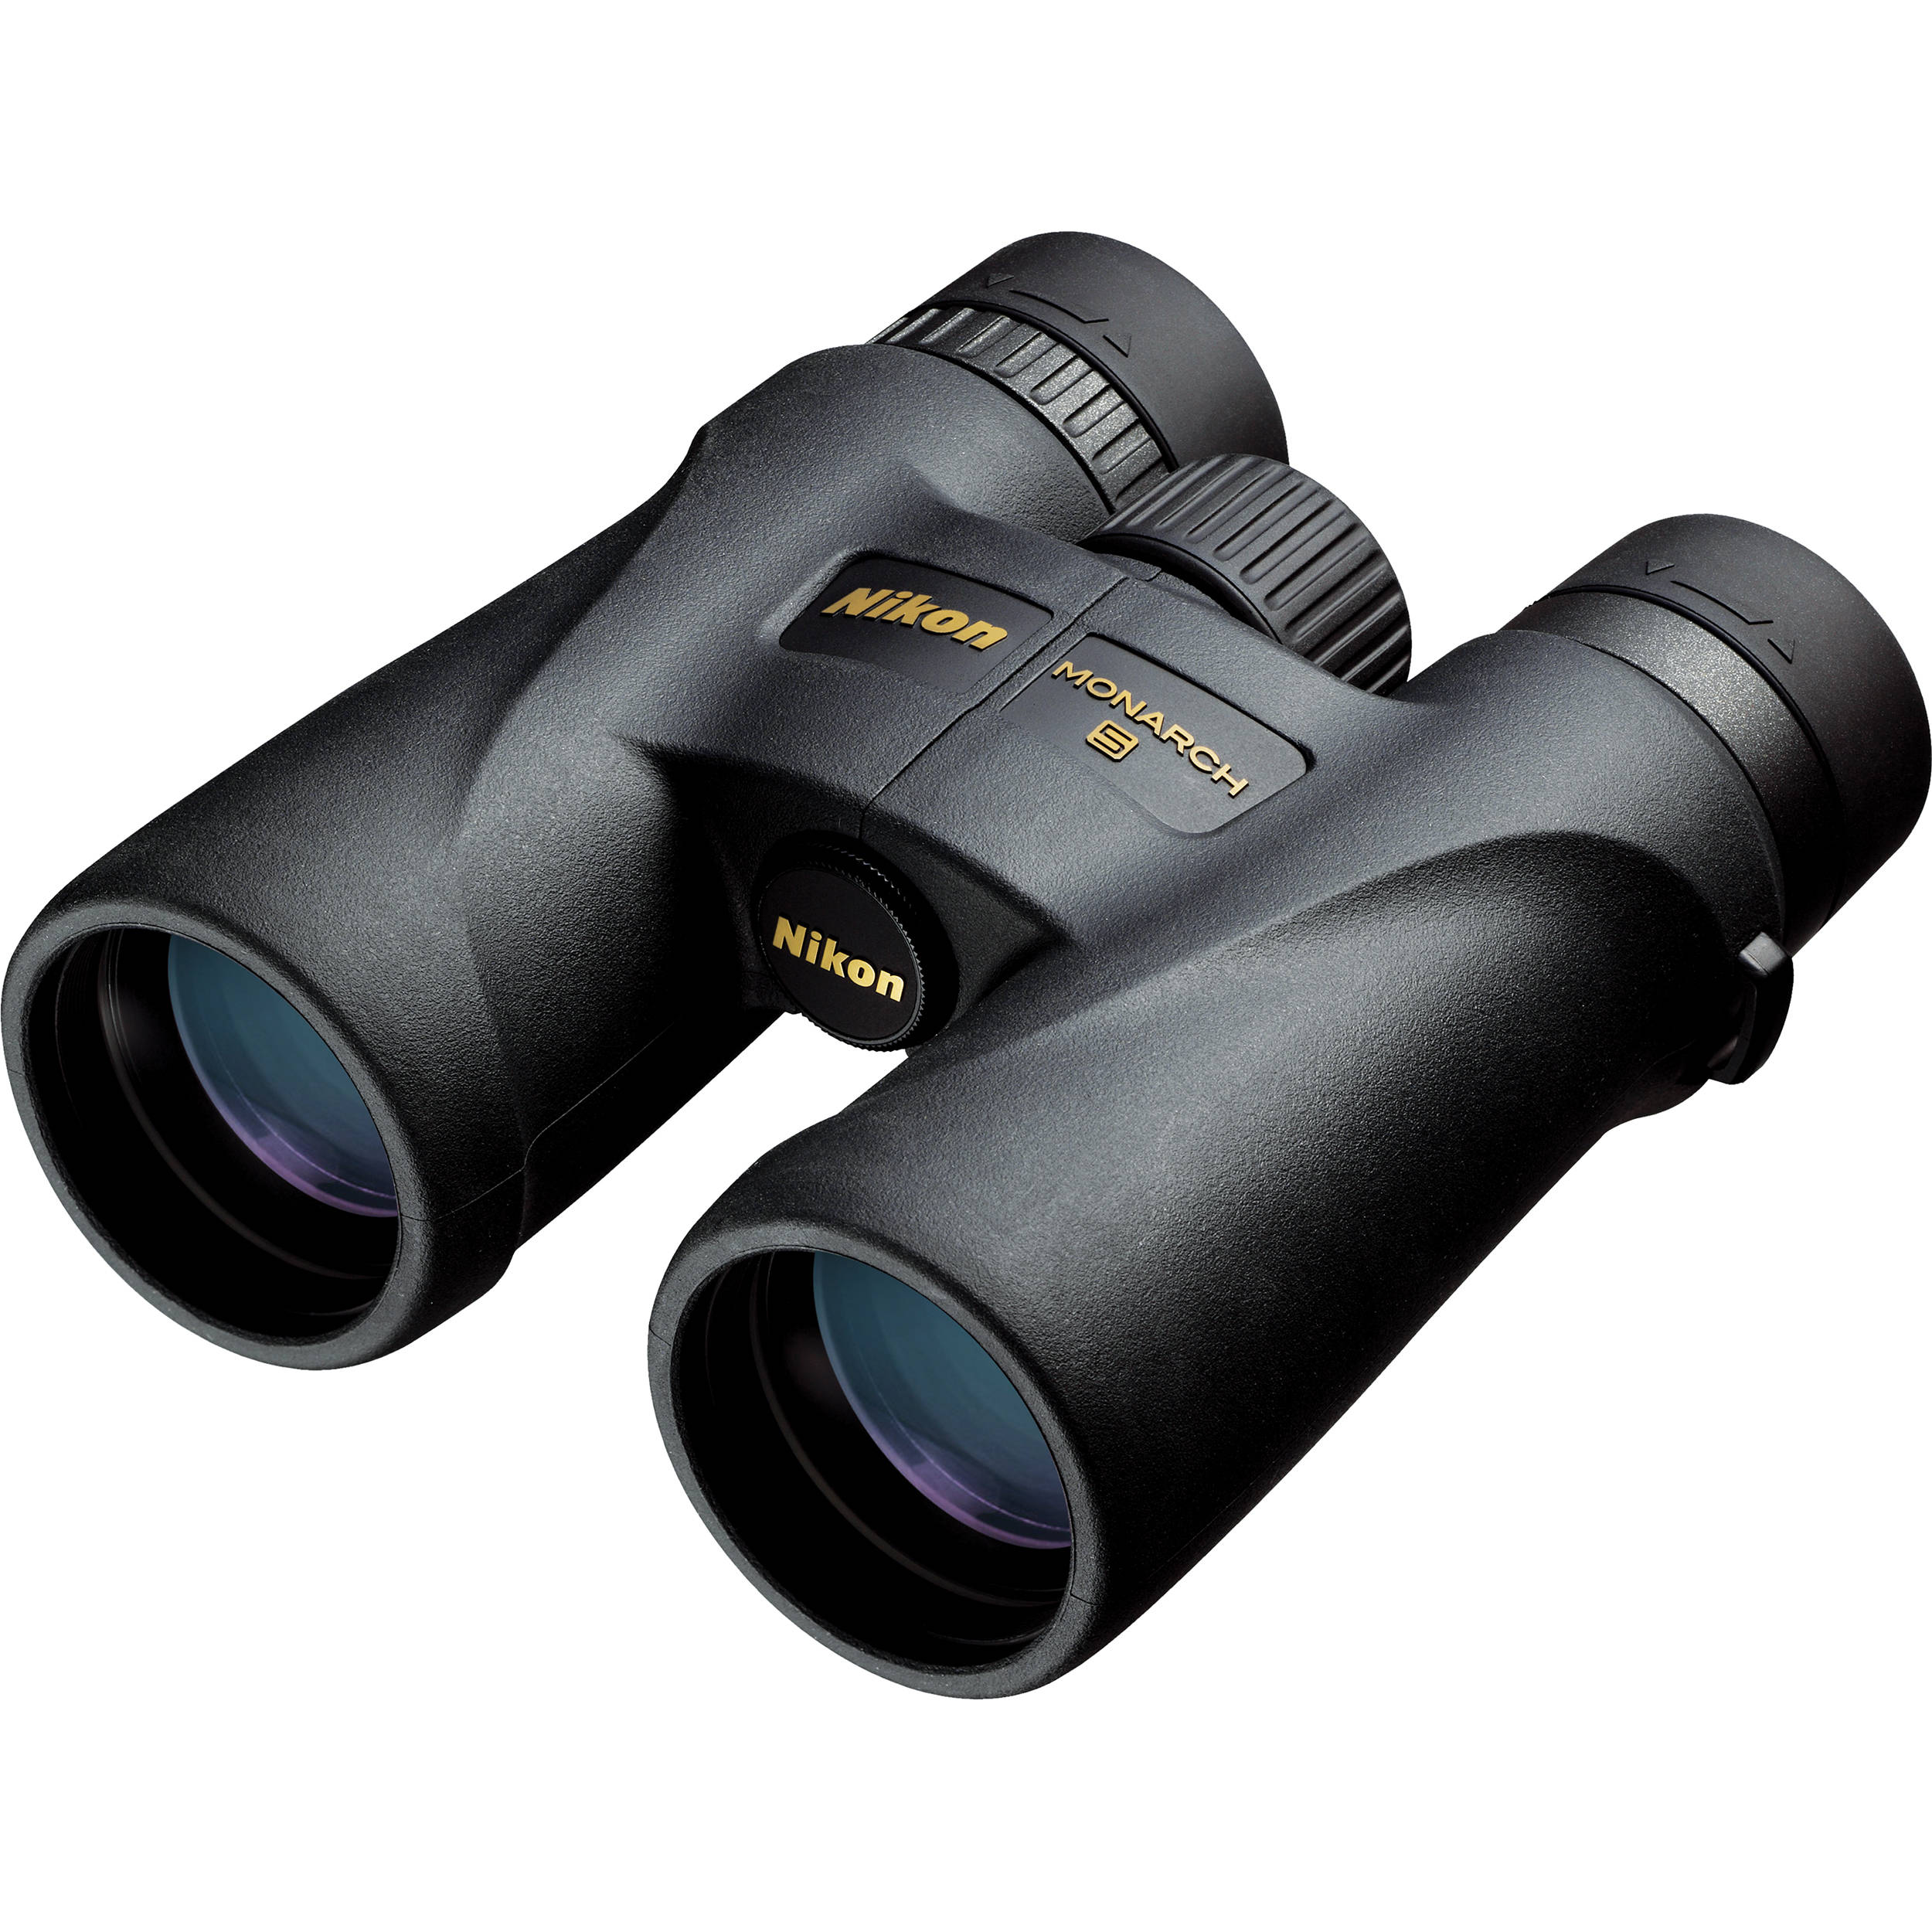 Basic specs of the binoculars